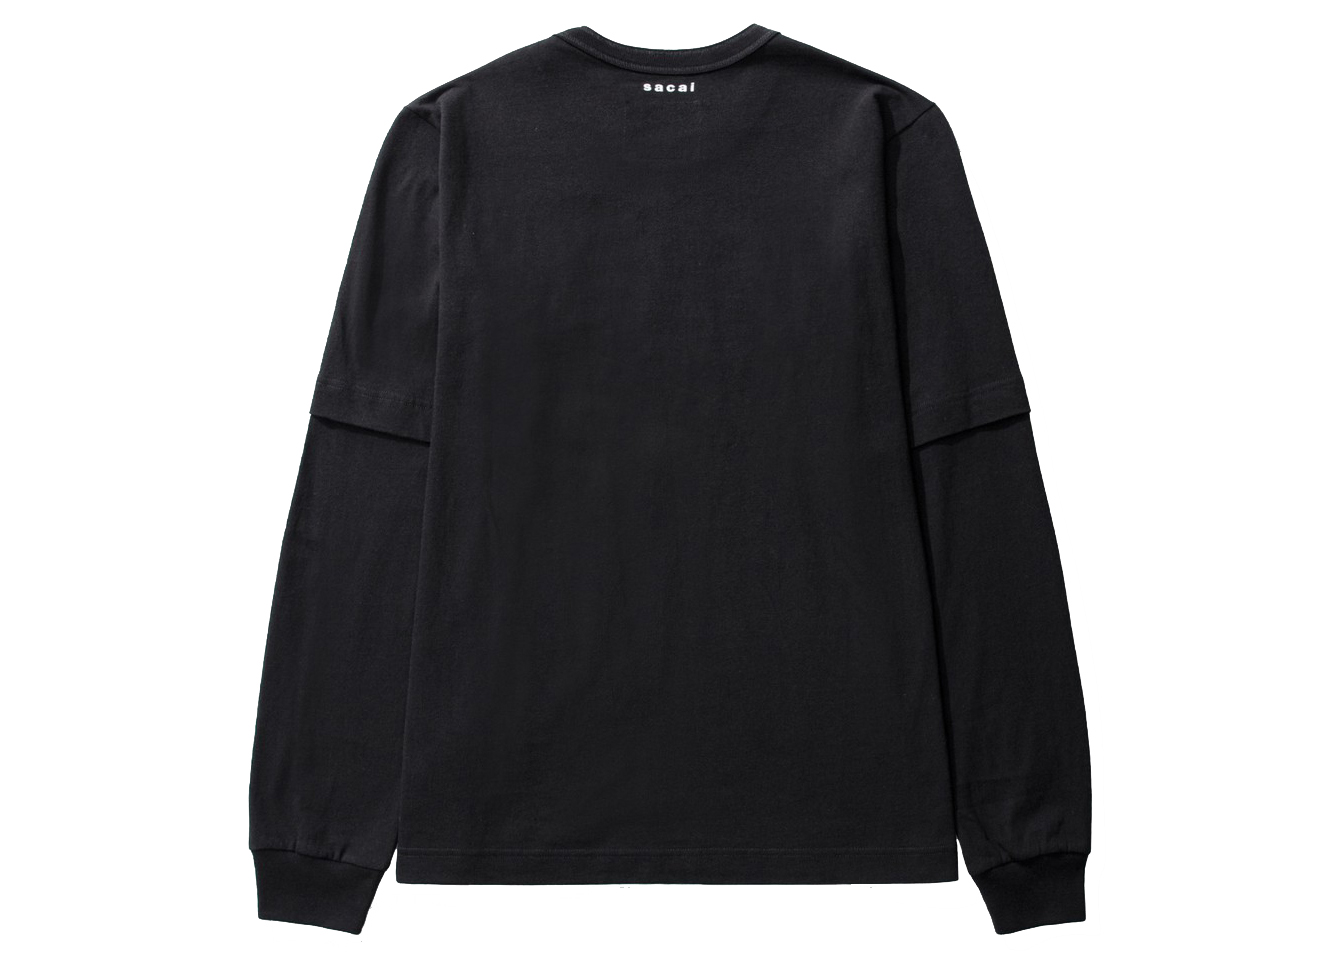 KAWS x Sacai Flock Print Long Sleeve T-shirt Black Men's - FW21 - US